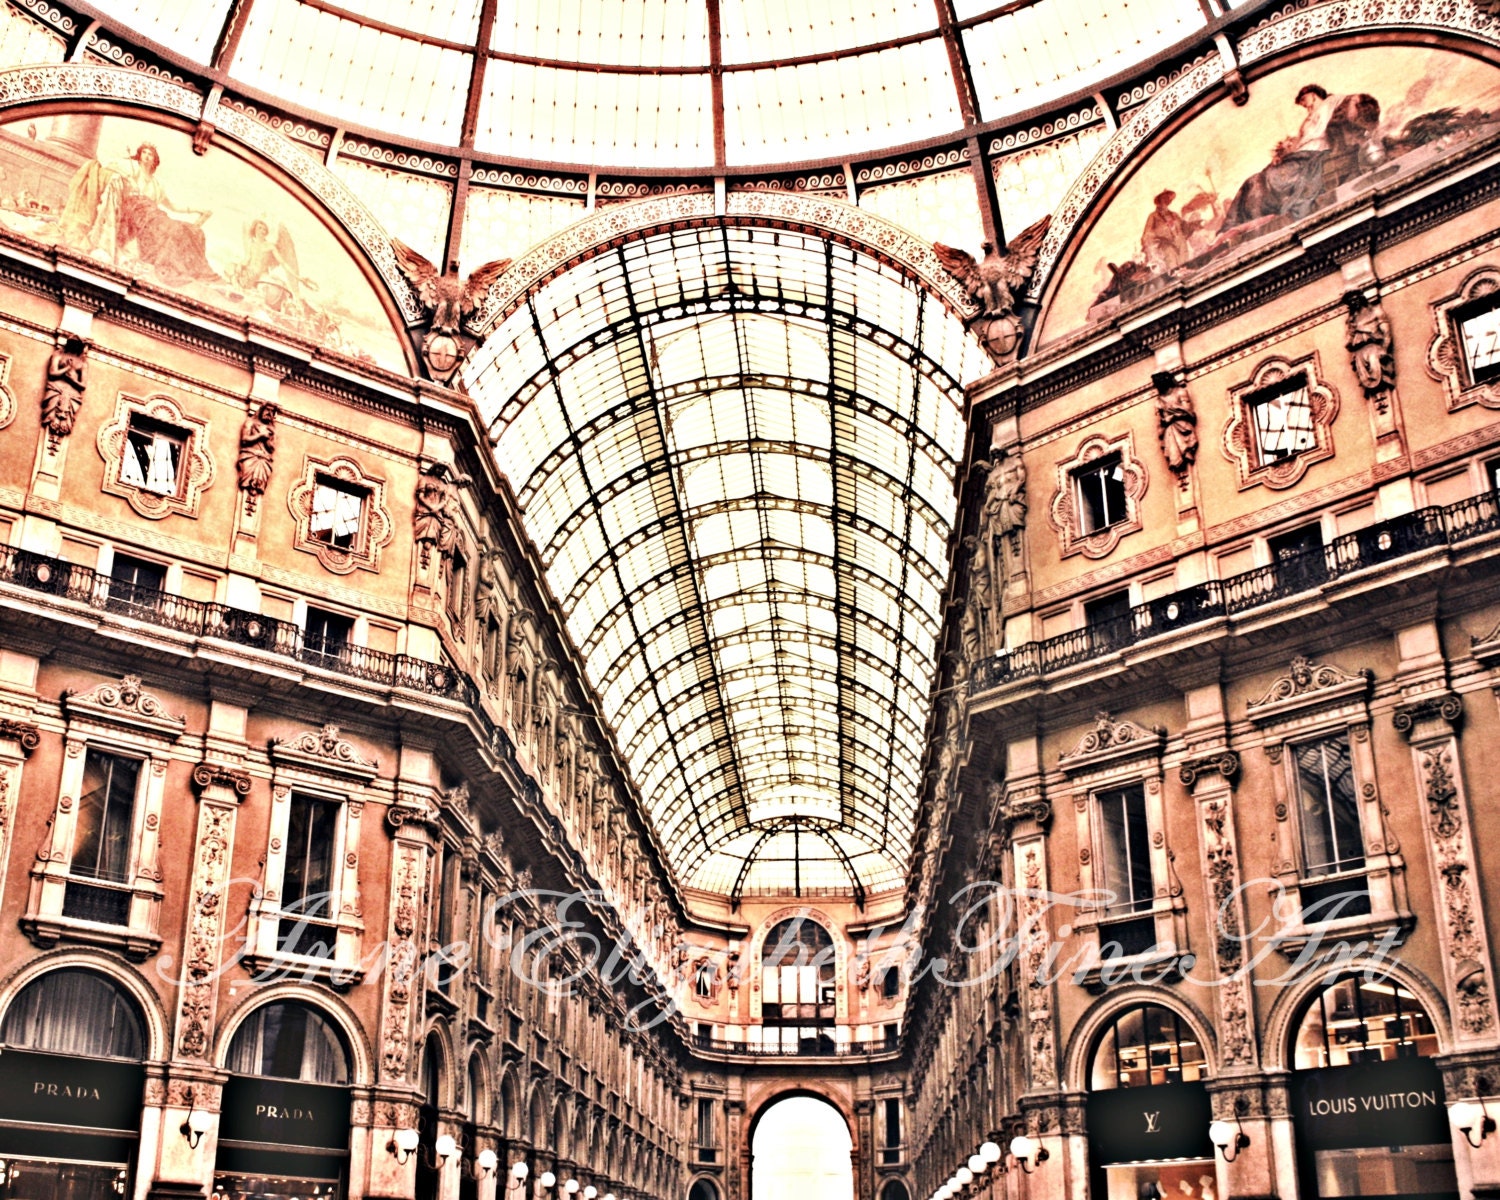 Louis Vuitton store Galleria Vittorio Emanuele II Milan Italy